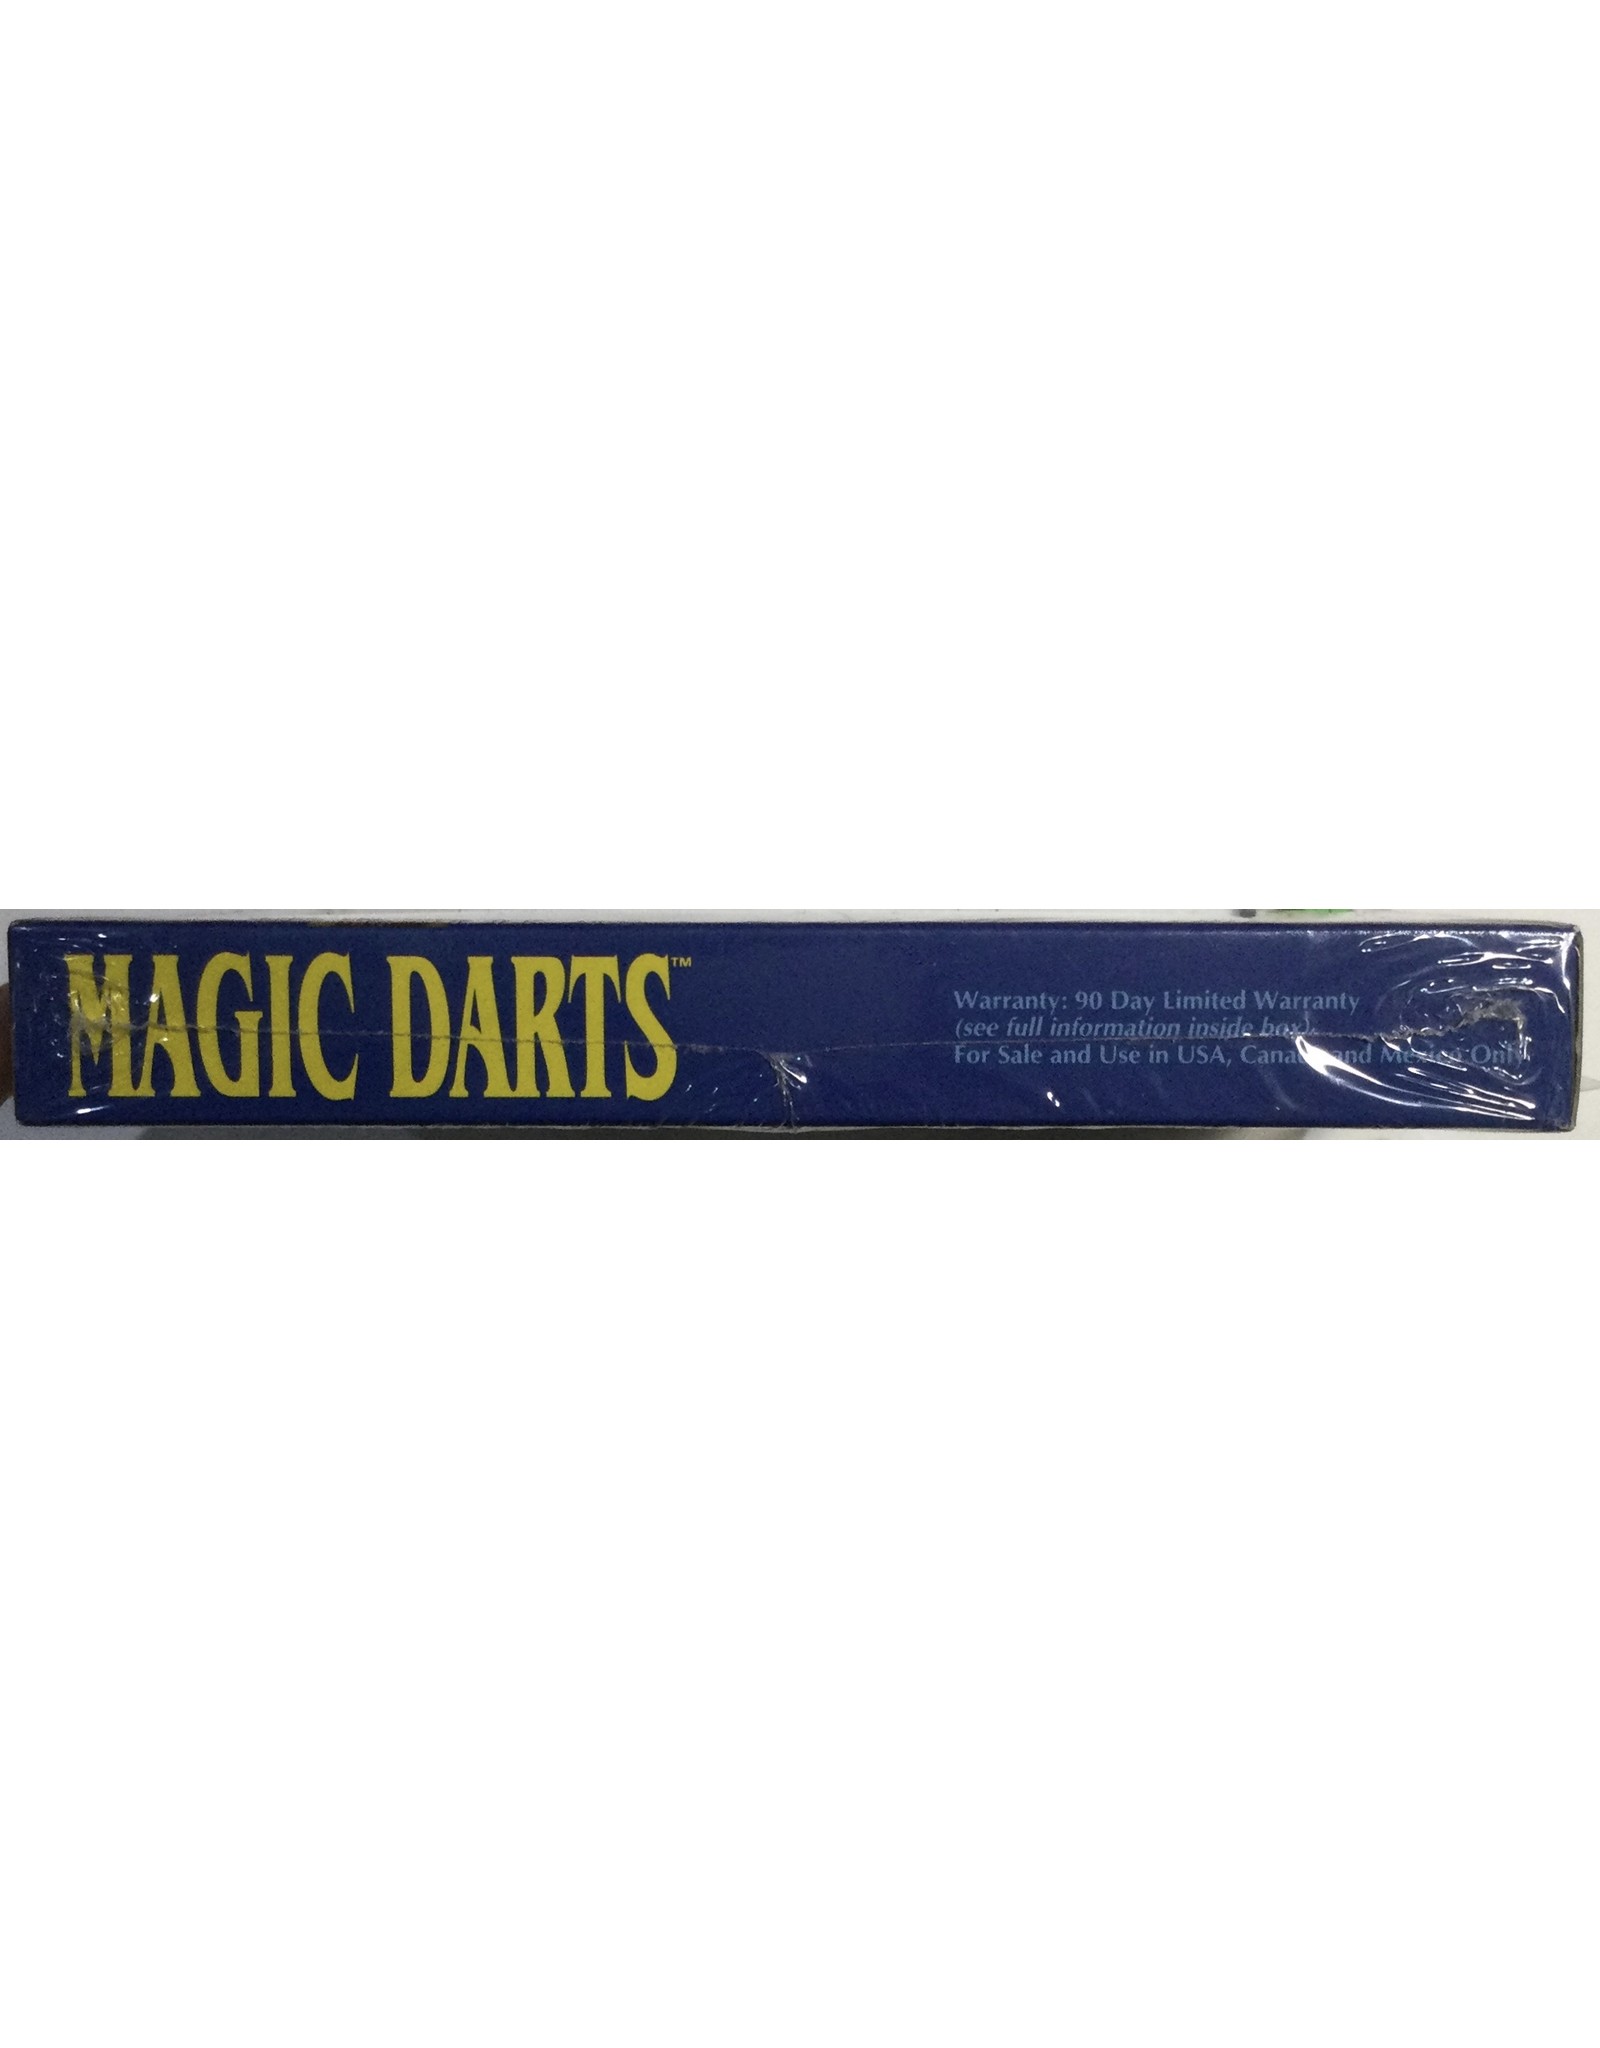 ROMSTAR Magic Darts for Nintendo Entertainment System (NES) - NIB